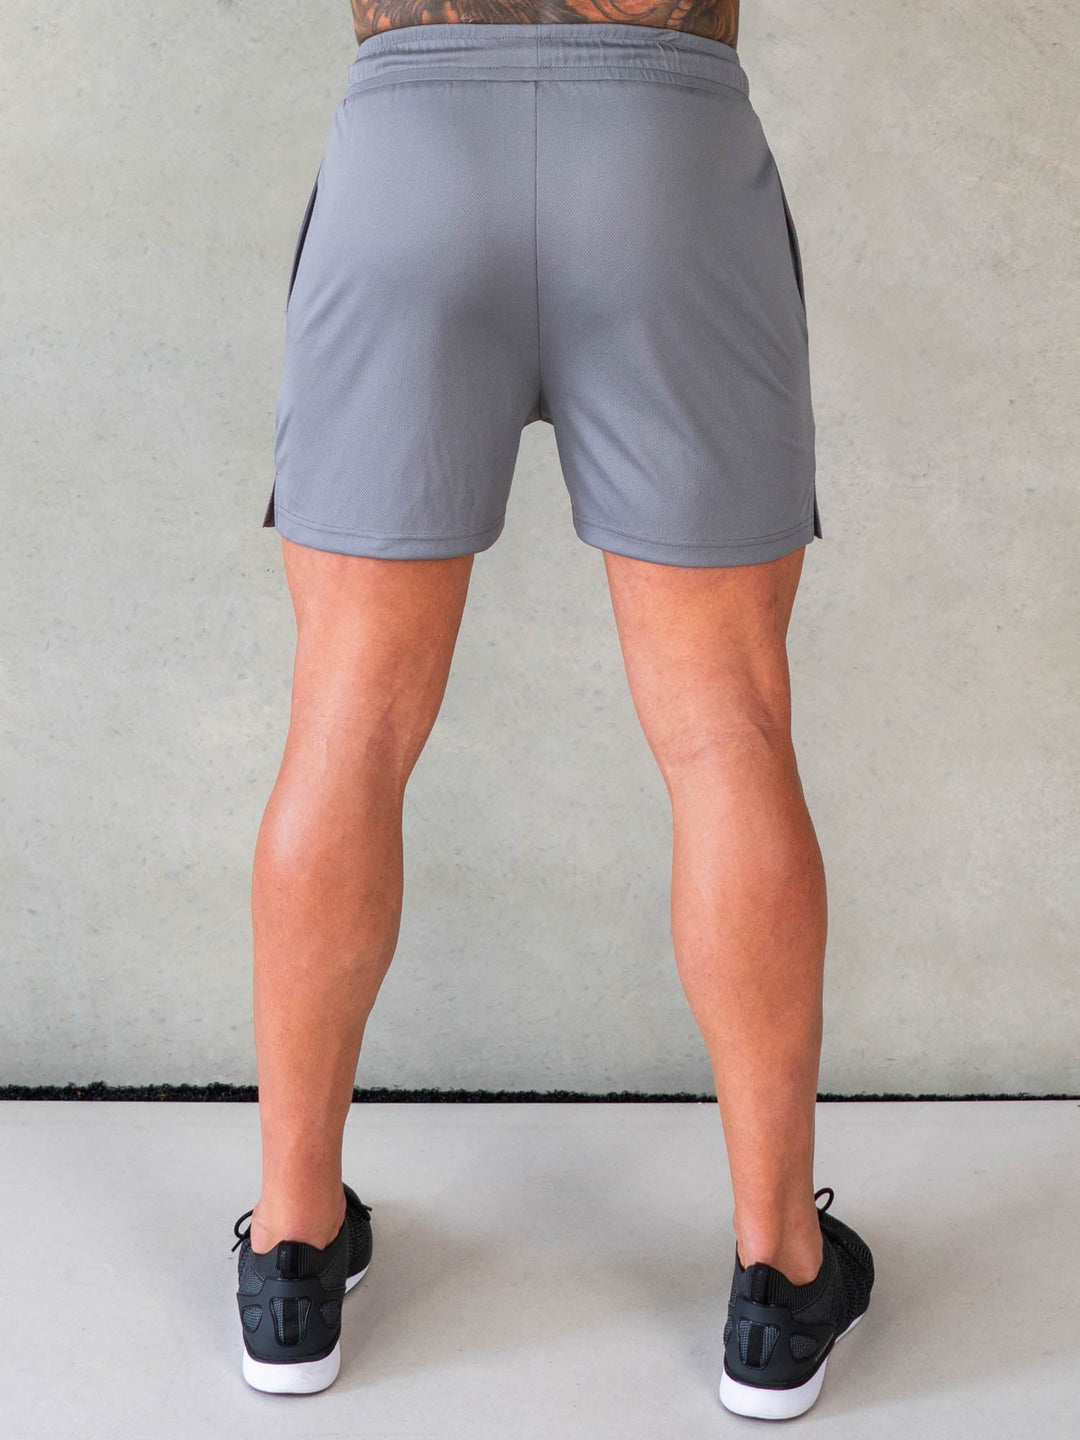 Octane Mesh Shorts - Steel Grey Clothing Ryderwear 